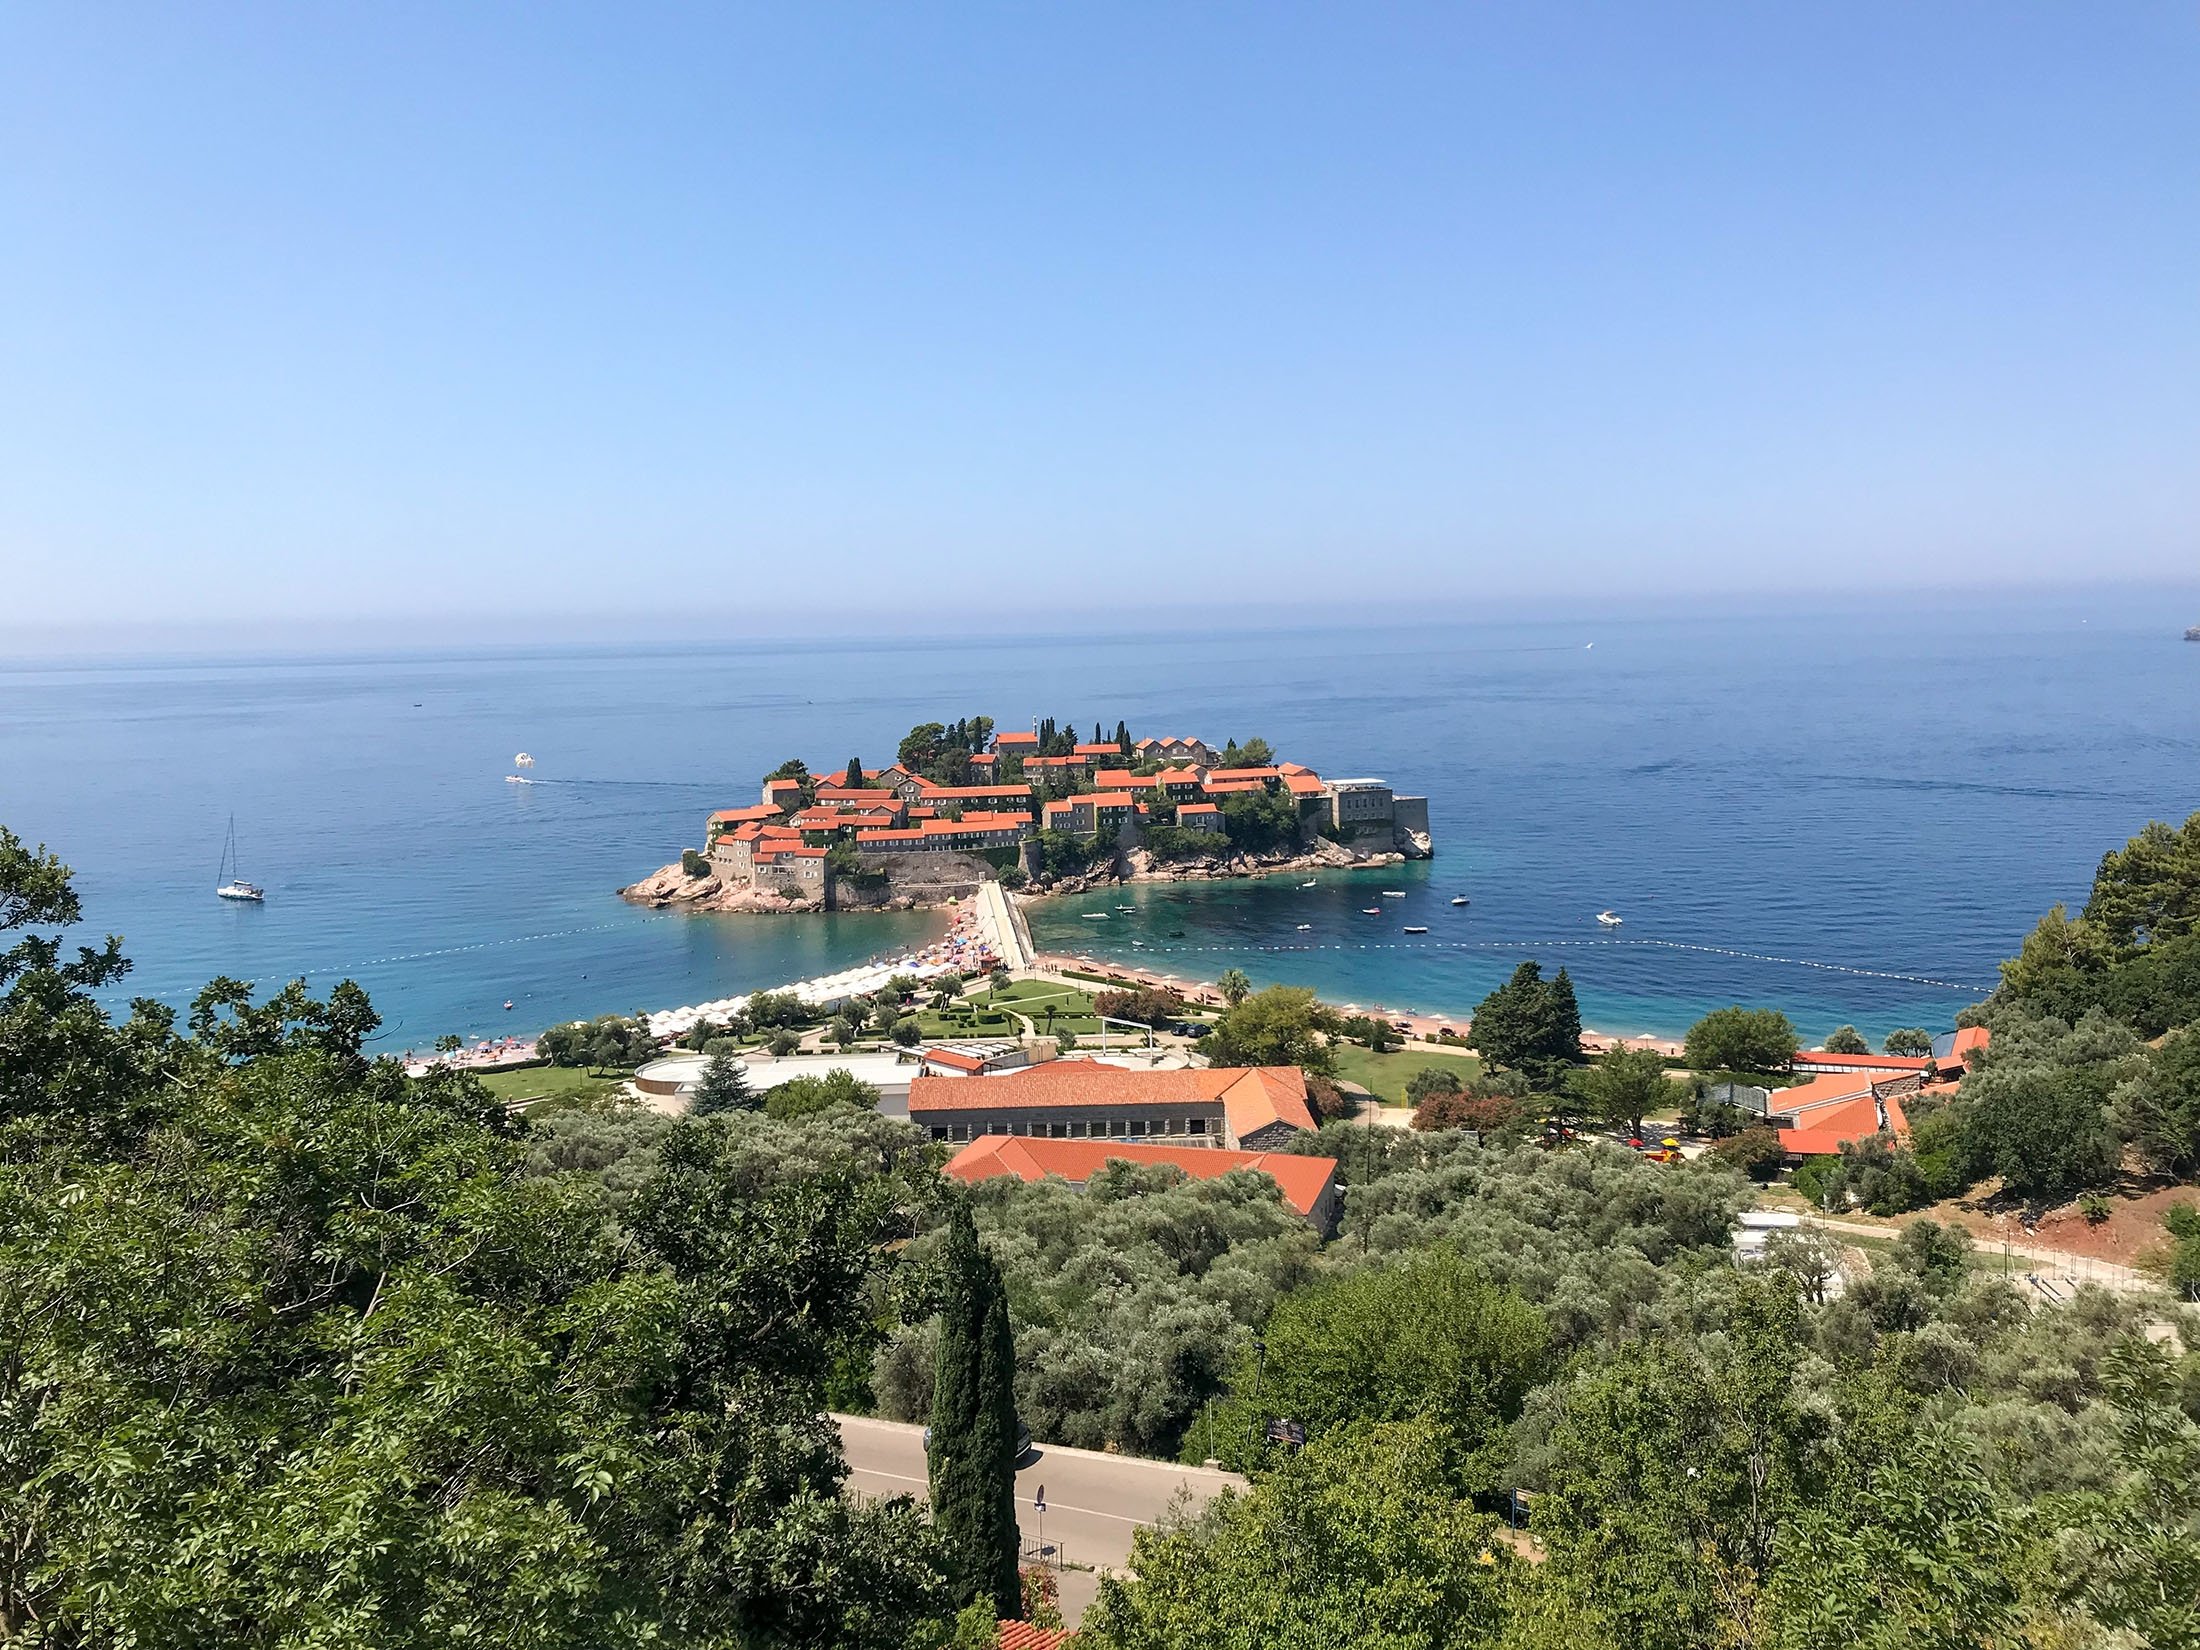 The Sveti Stefan island in Budva, Montenegro. (Photo by Özge Şengelen)